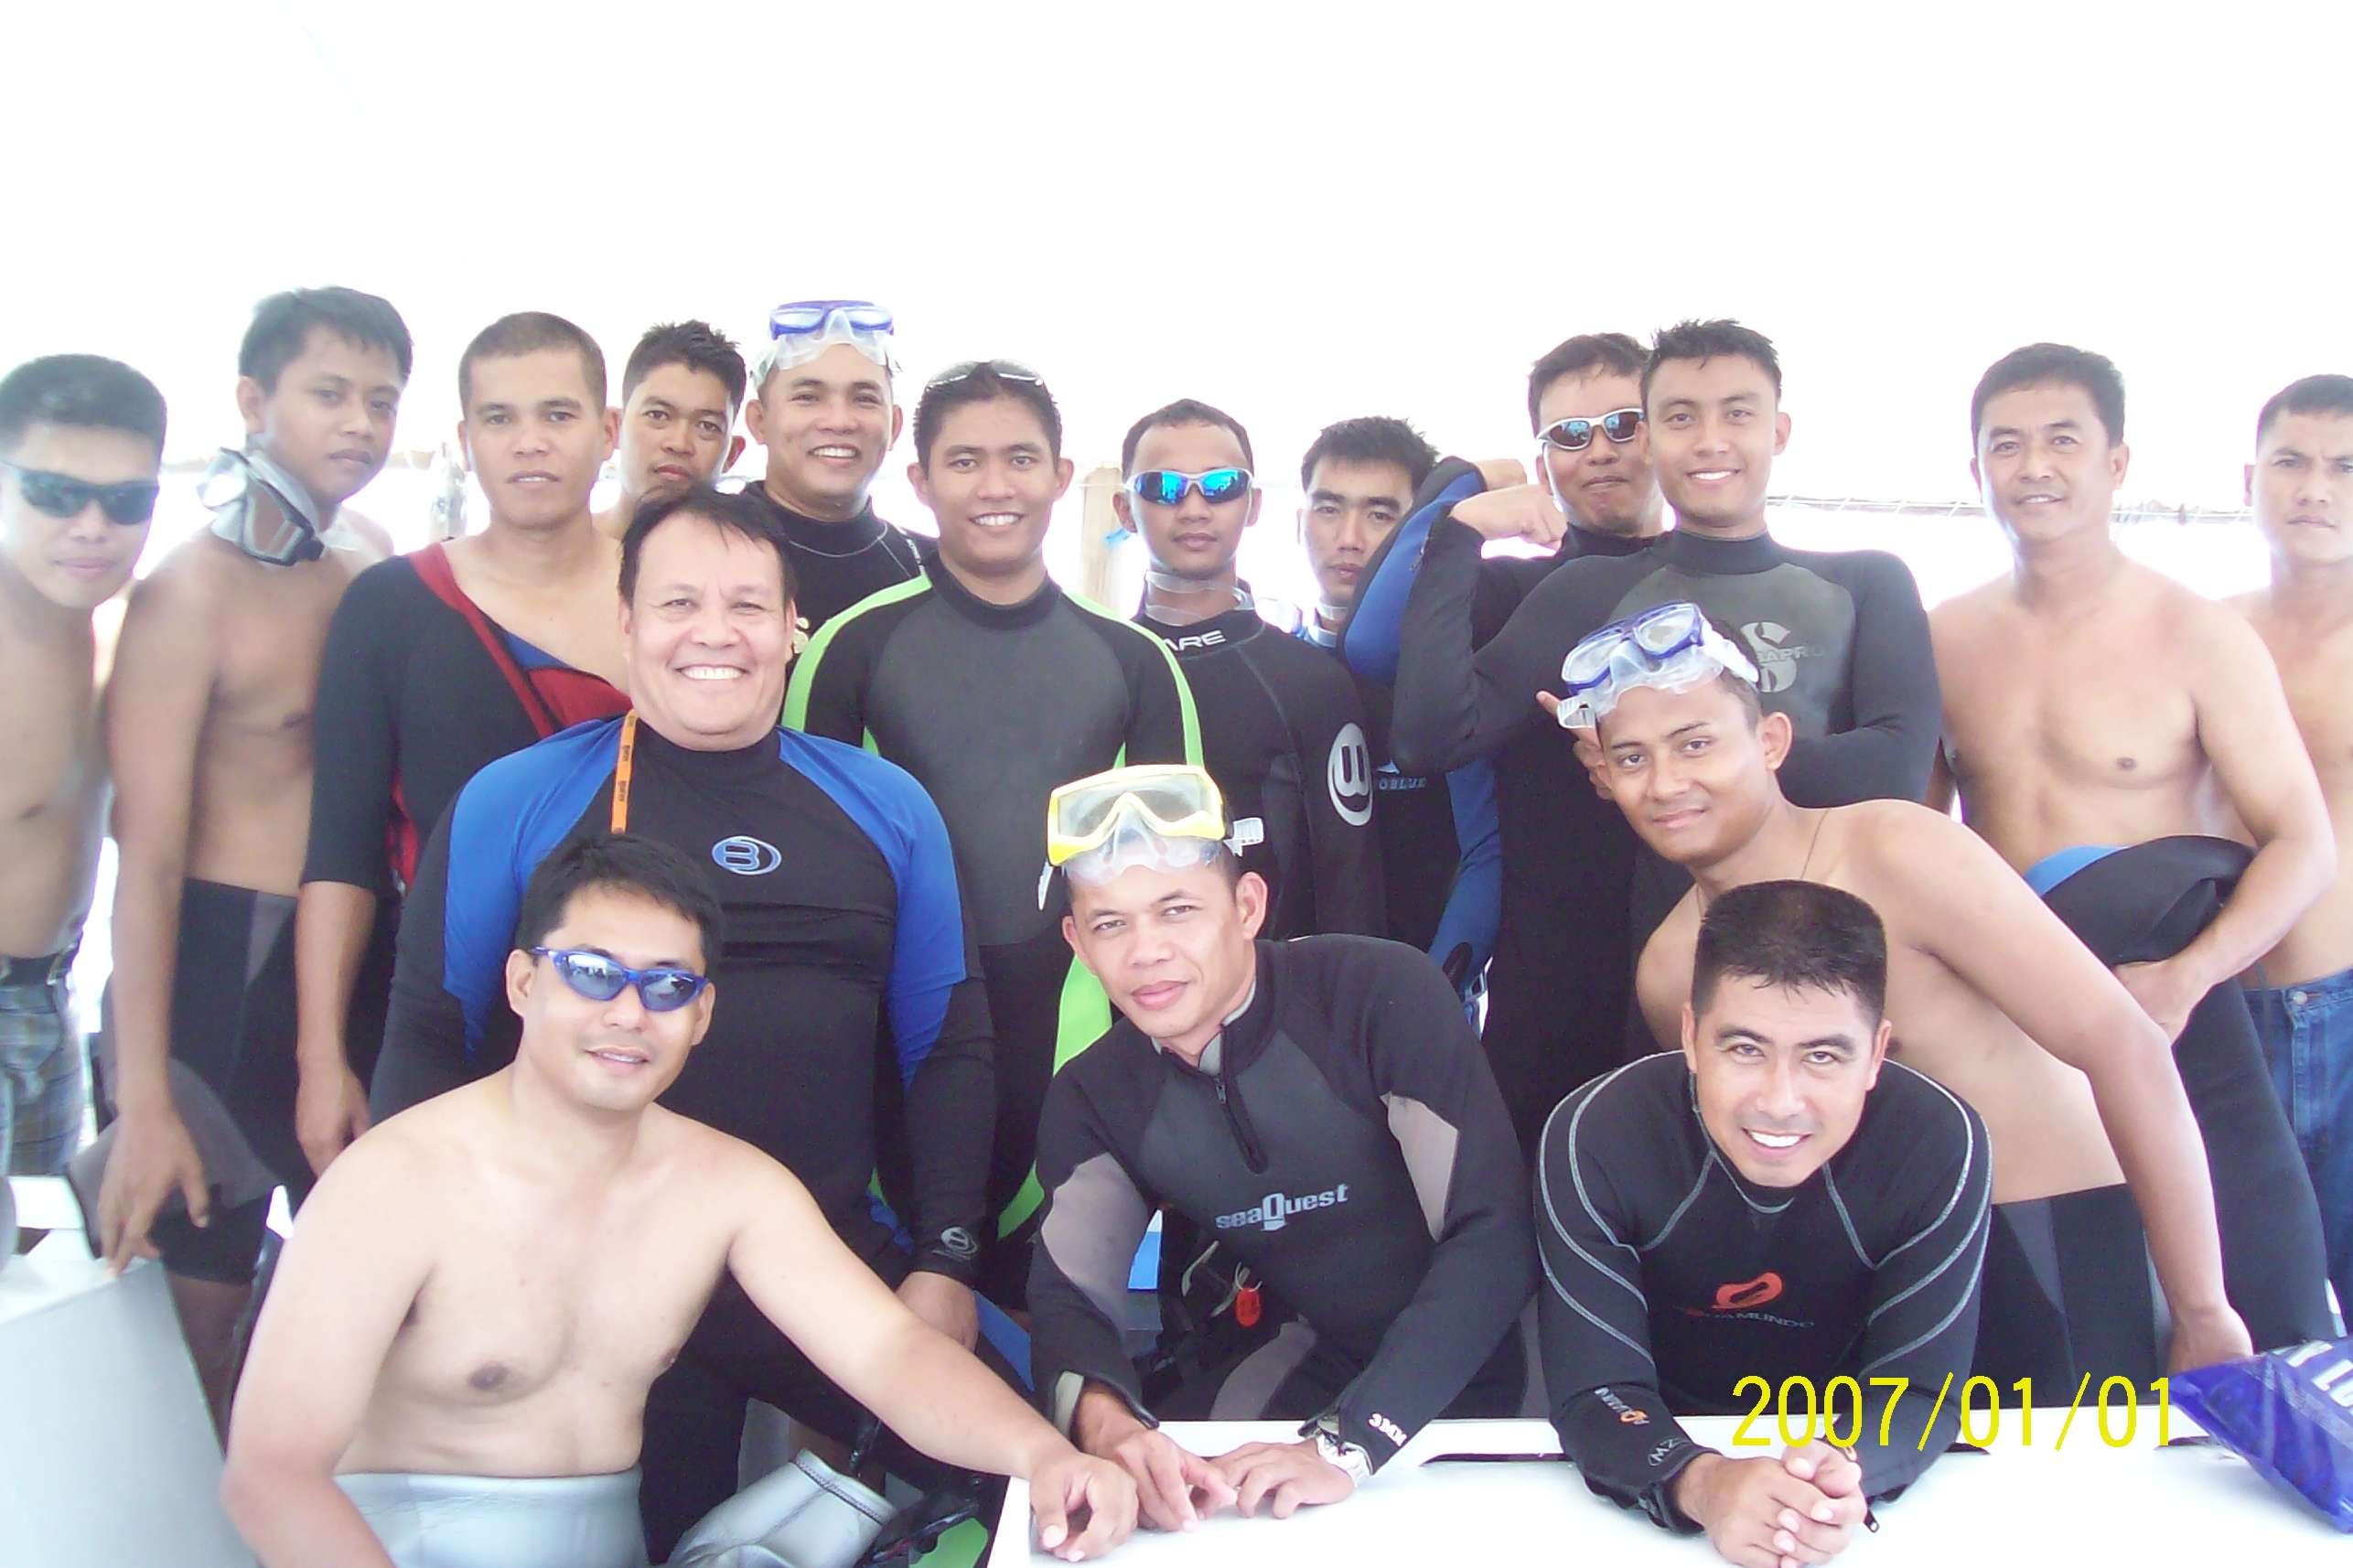 The Bohol Police Tourist Divers